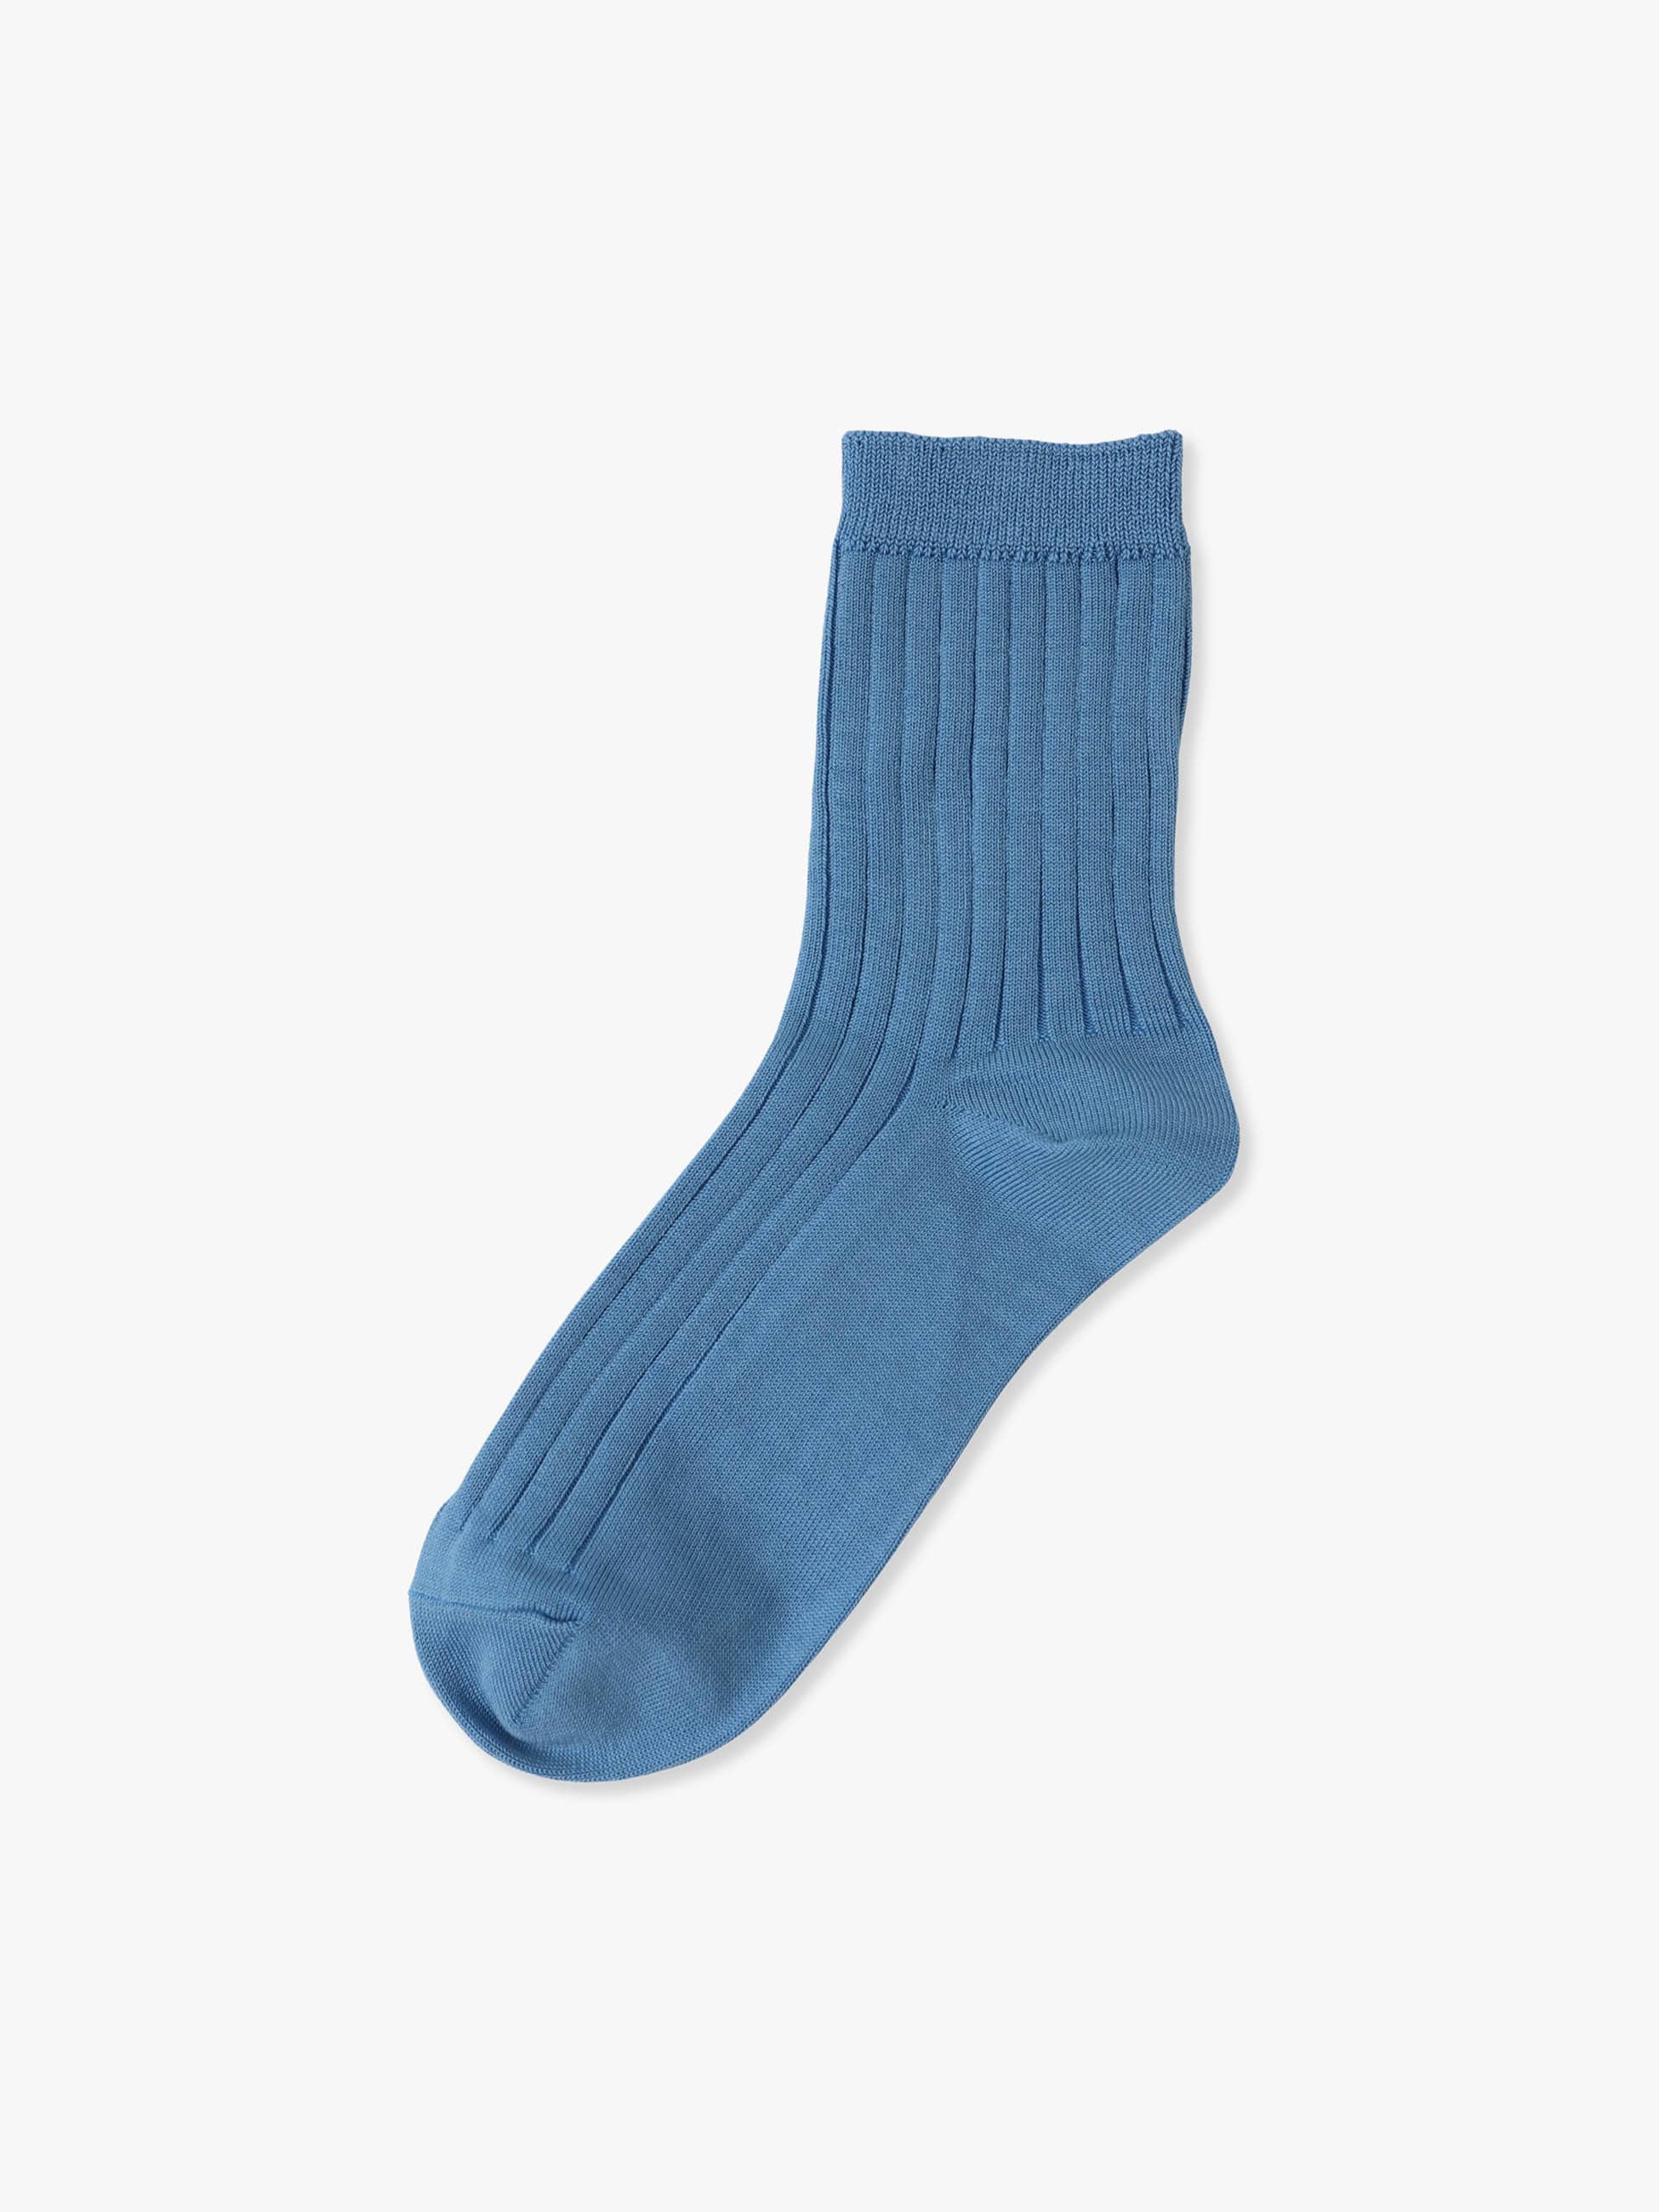 Her Socks 詳細画像 blue 1